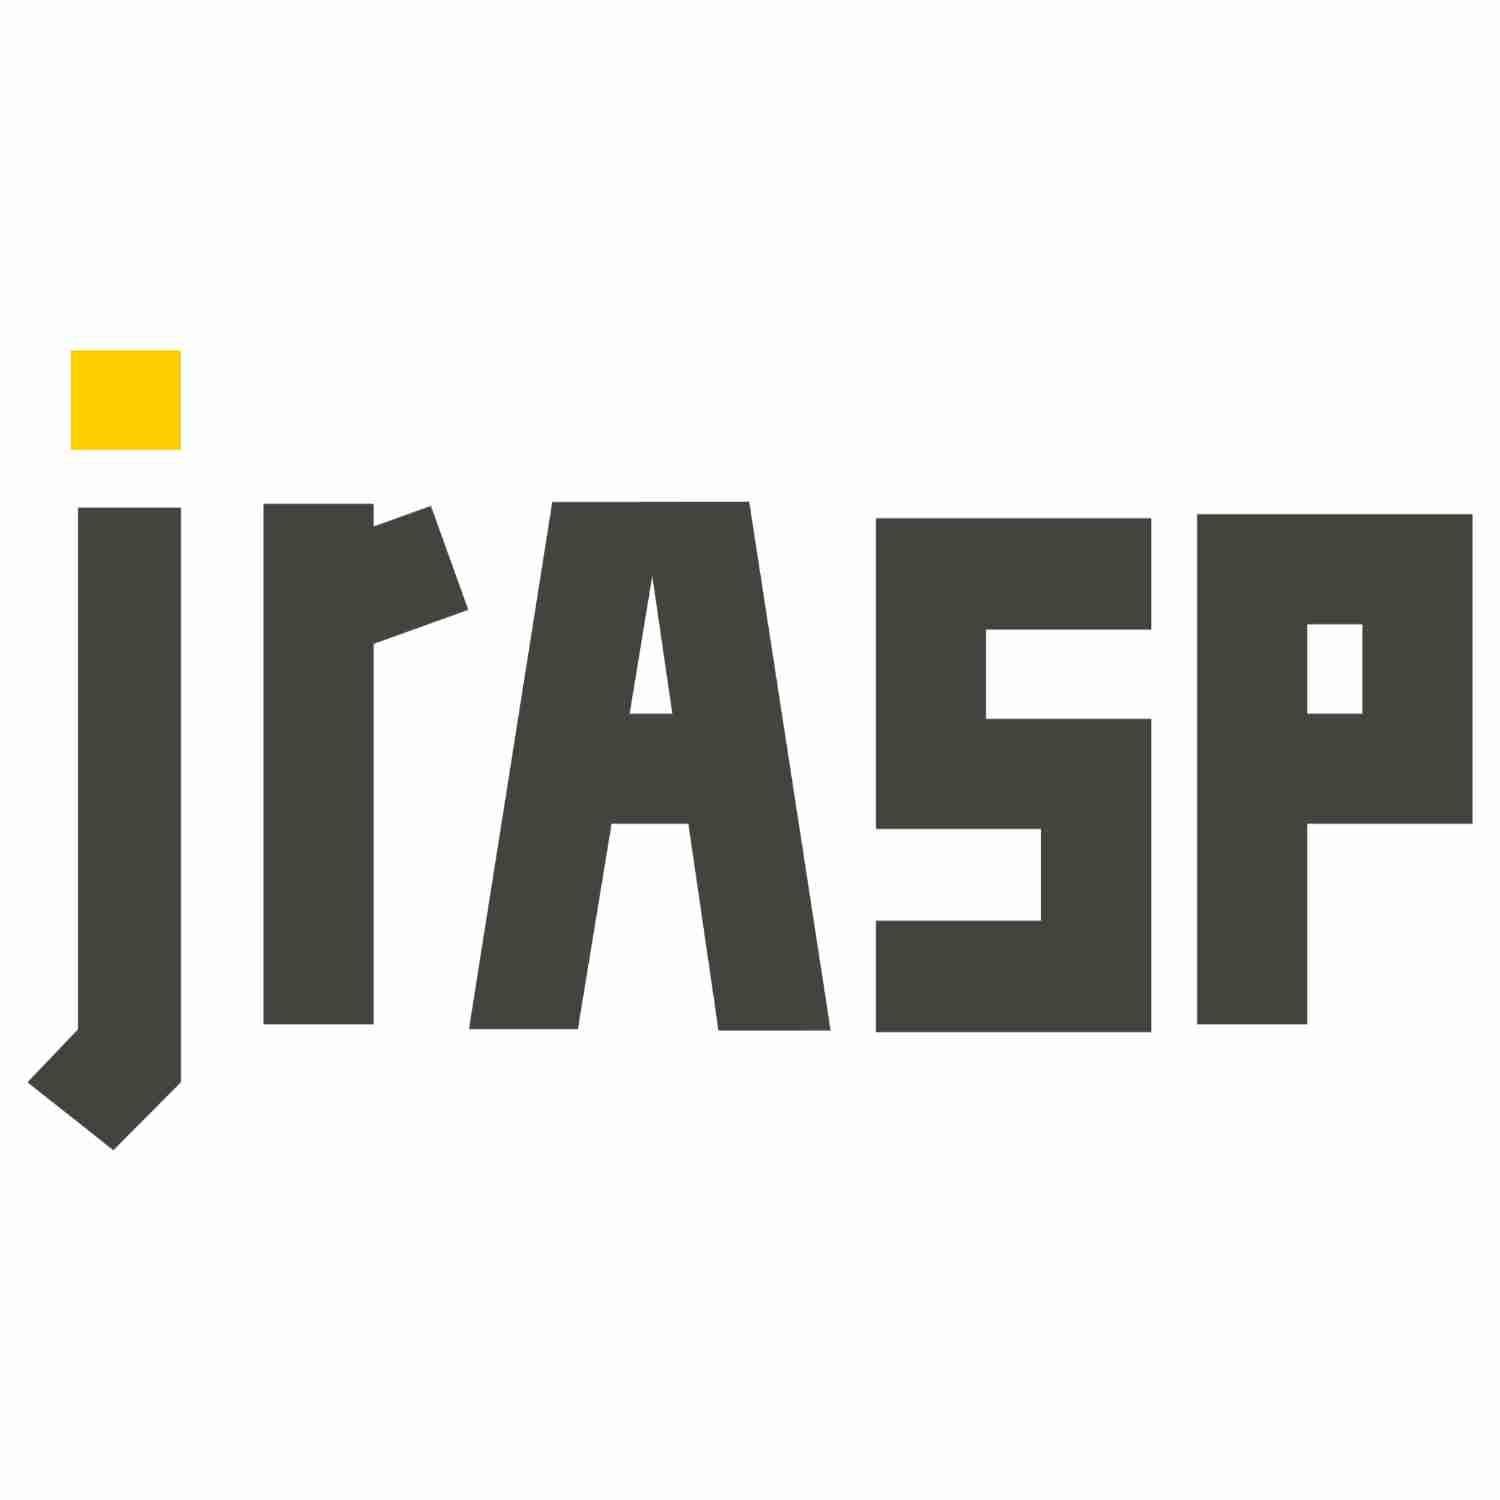 JRASP